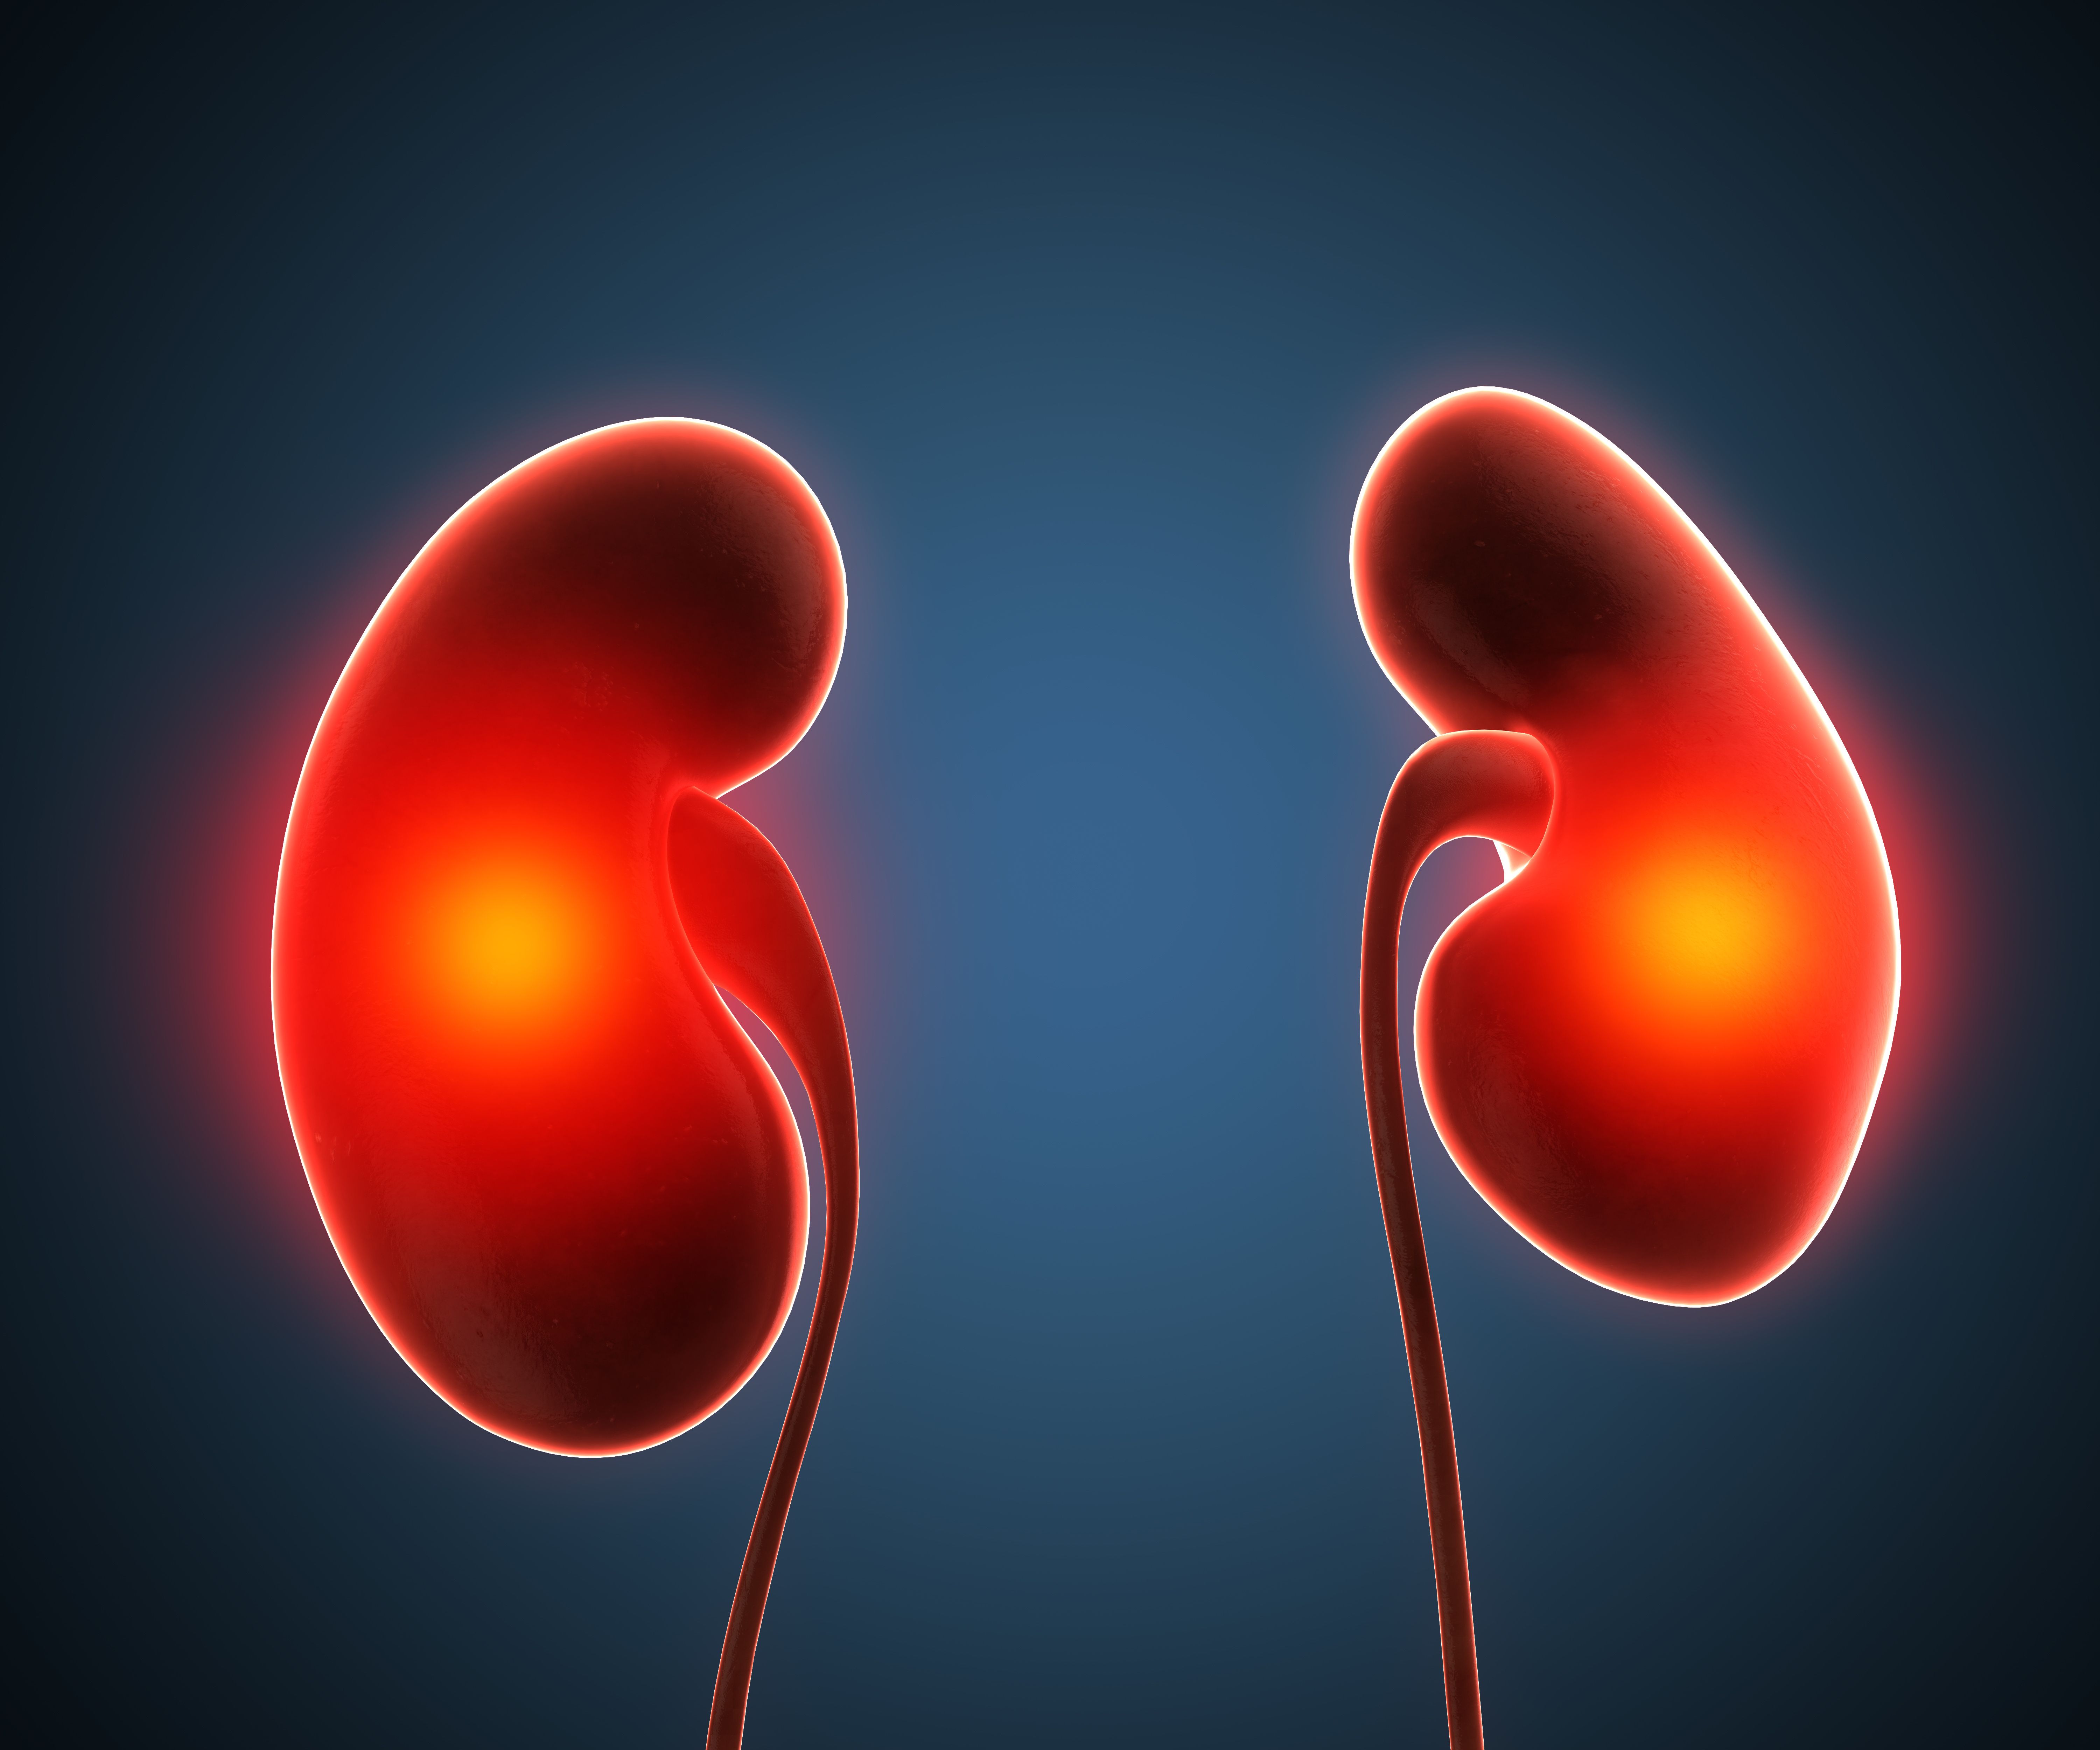 Kidney Tubular Secretion Associated With Faster eGFR Decline